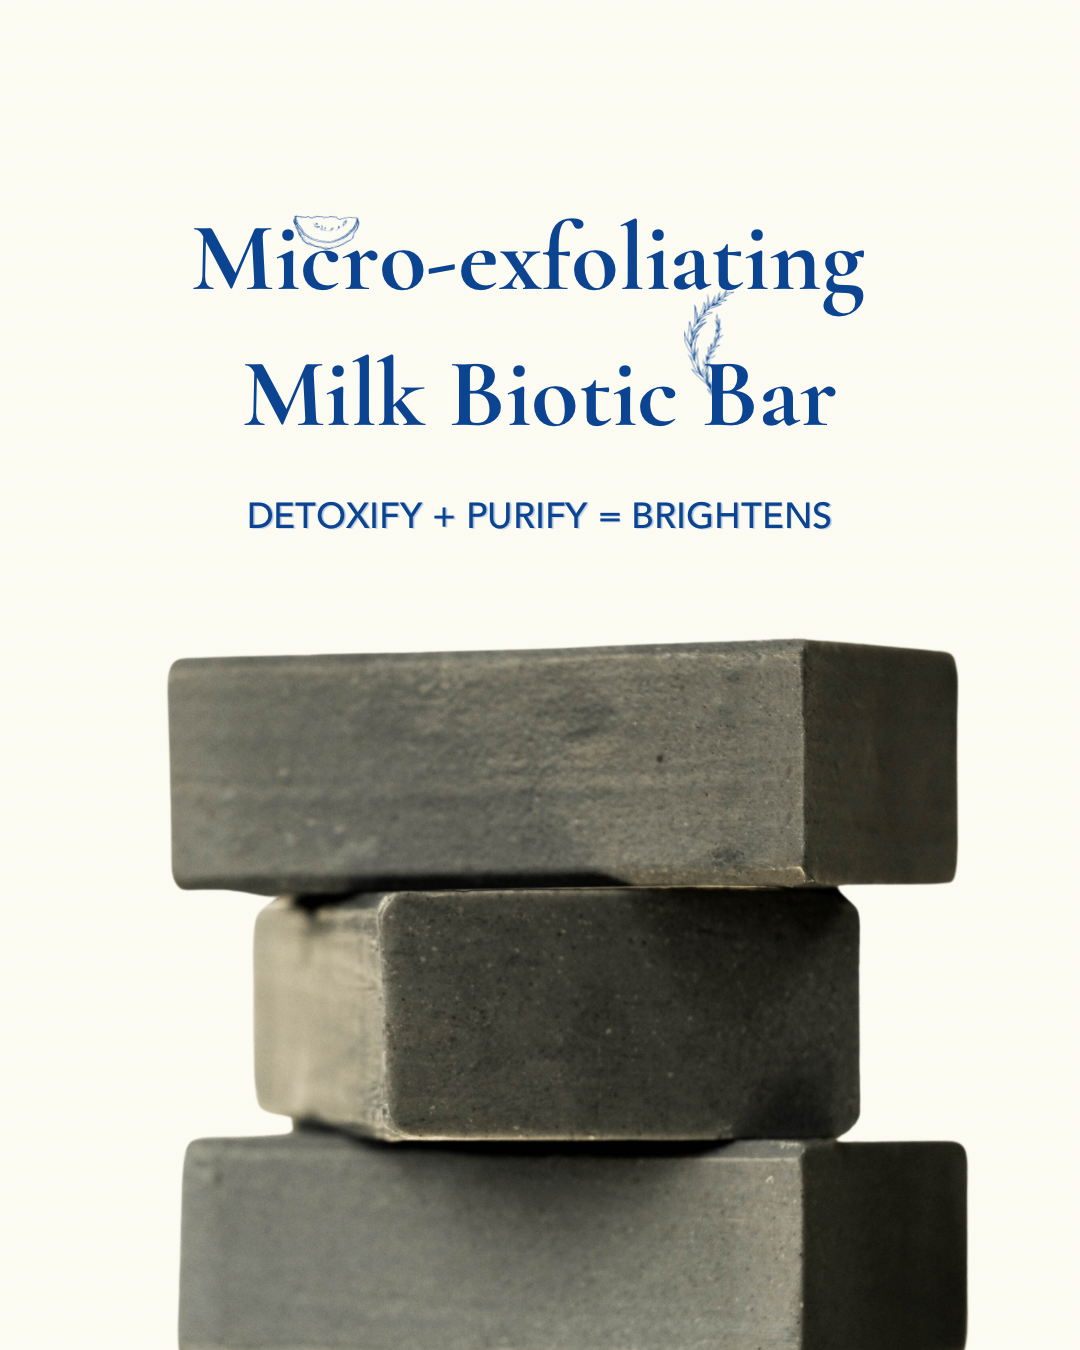 Micro-exfoliating Milk Biotic Bar